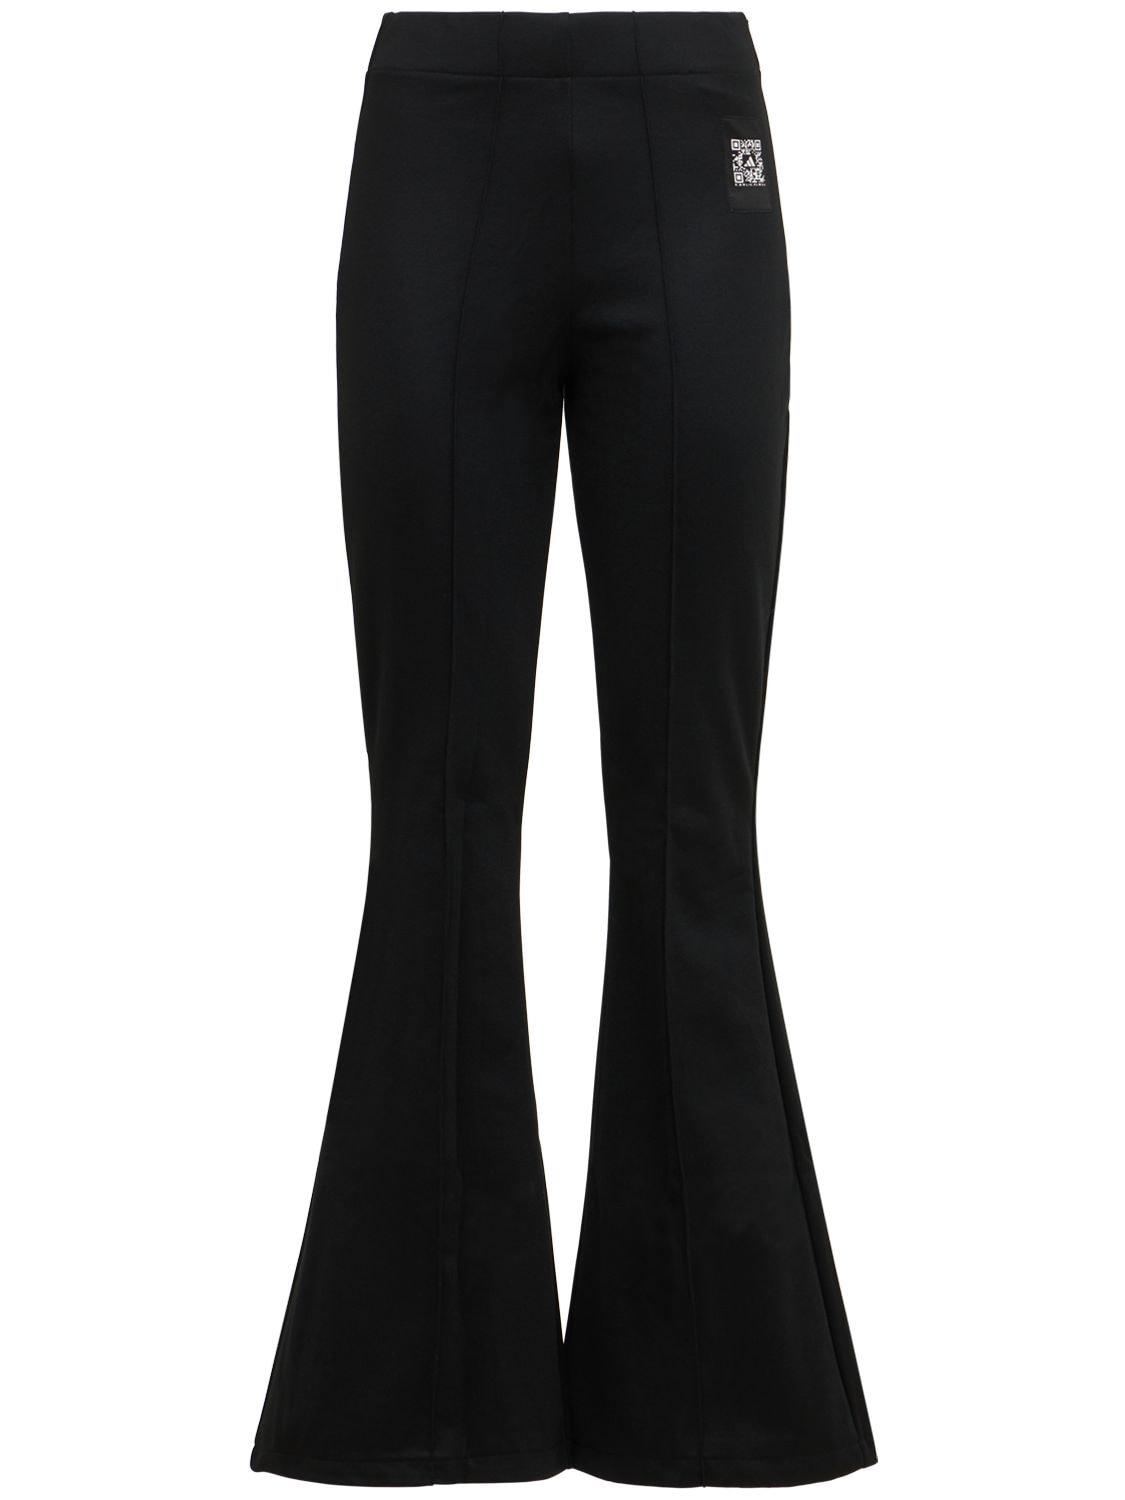 adidas Originals Karlie Kloss High Waist Flared Pants in Black